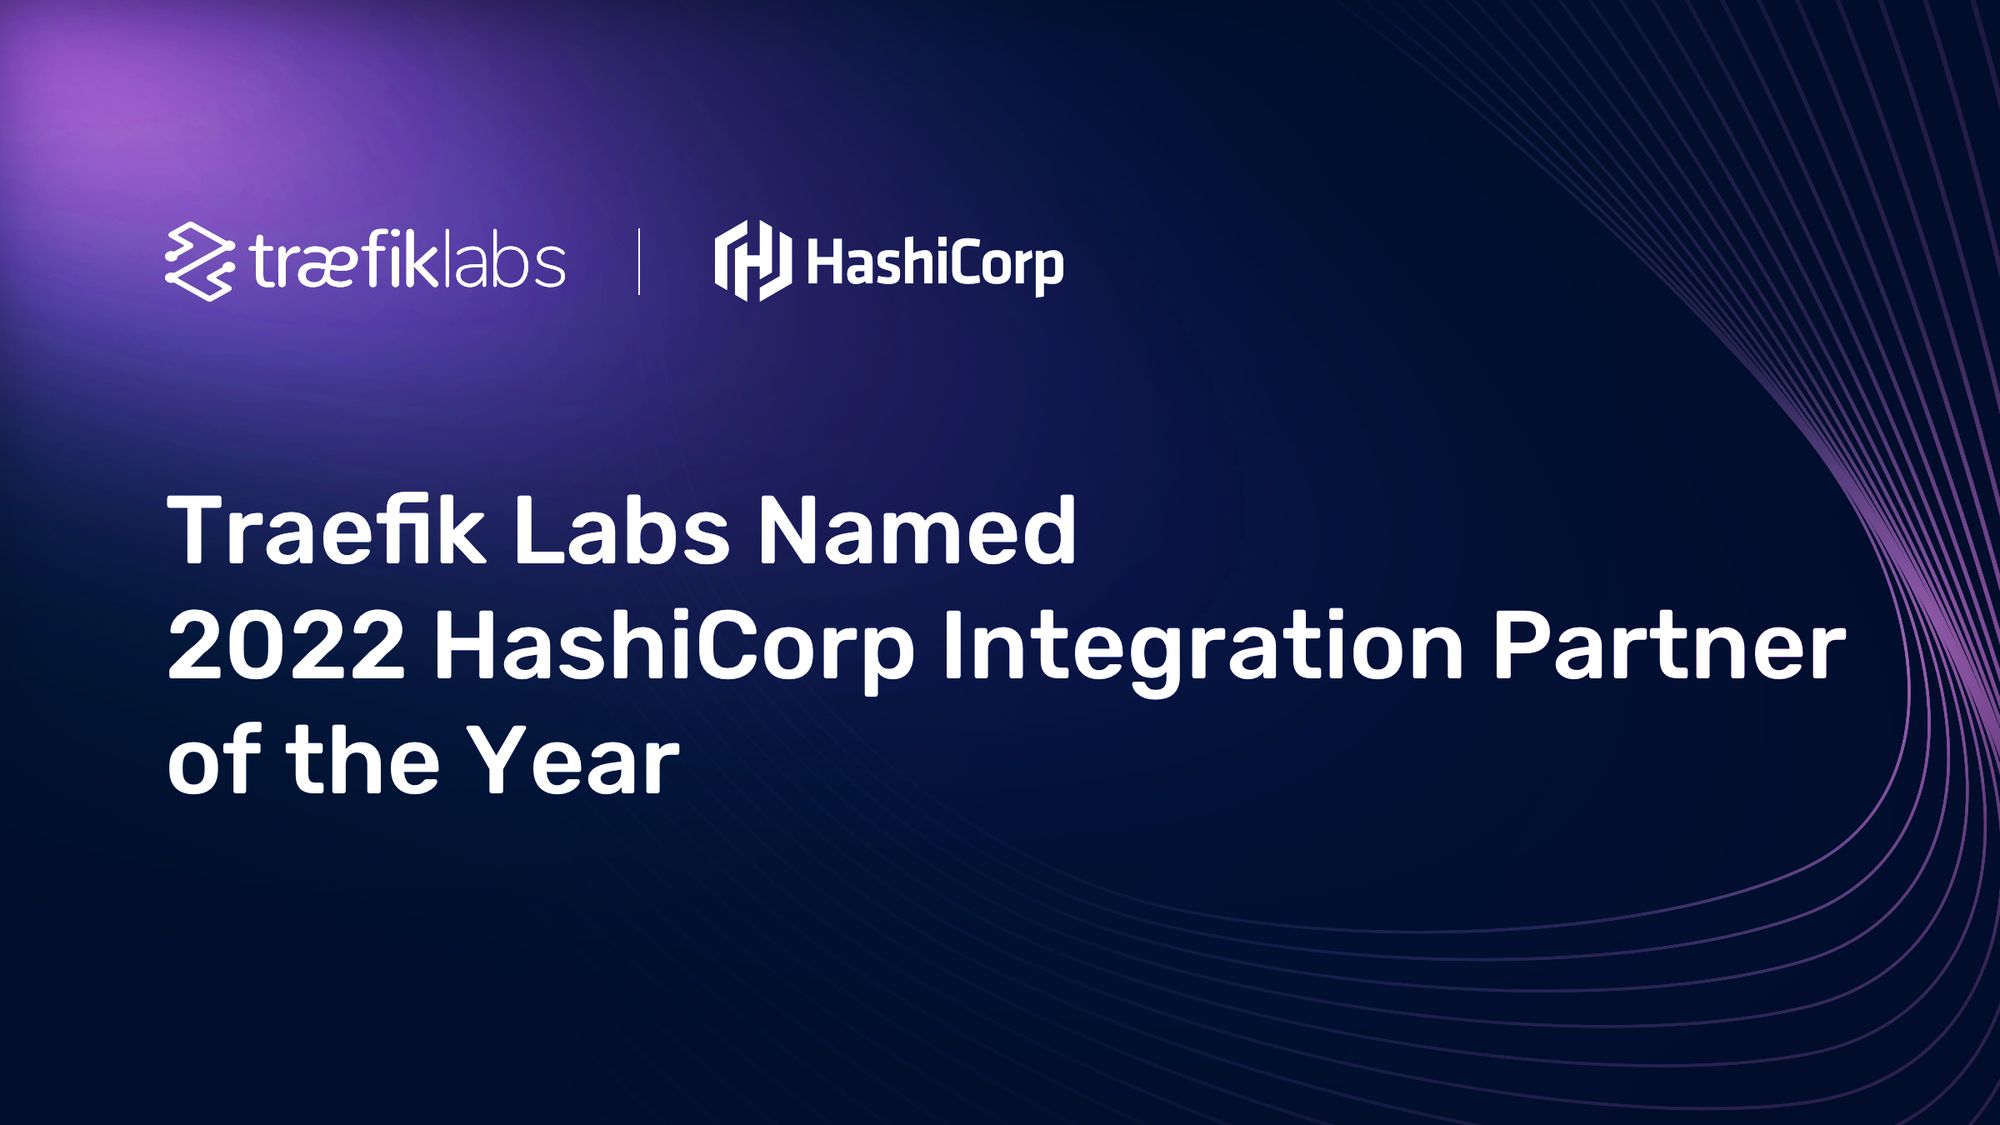 traefik labs named 2022 hashicorp integration partner